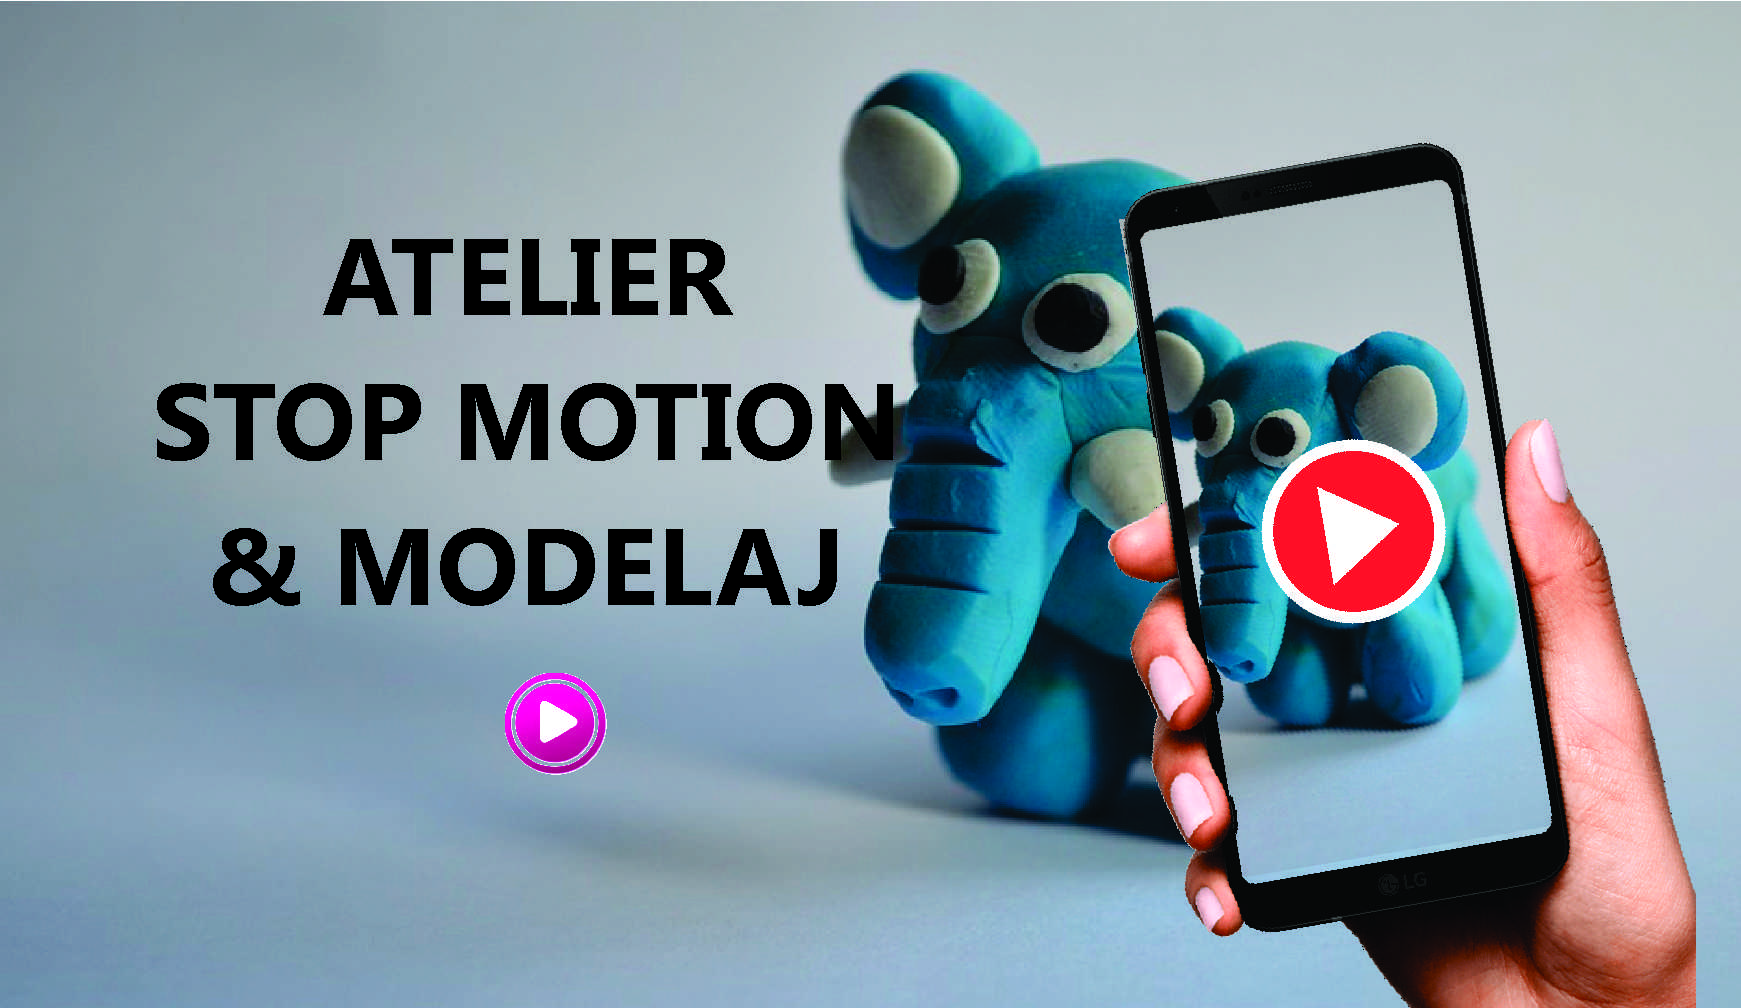 Atelier Stop Motion & Modelaj